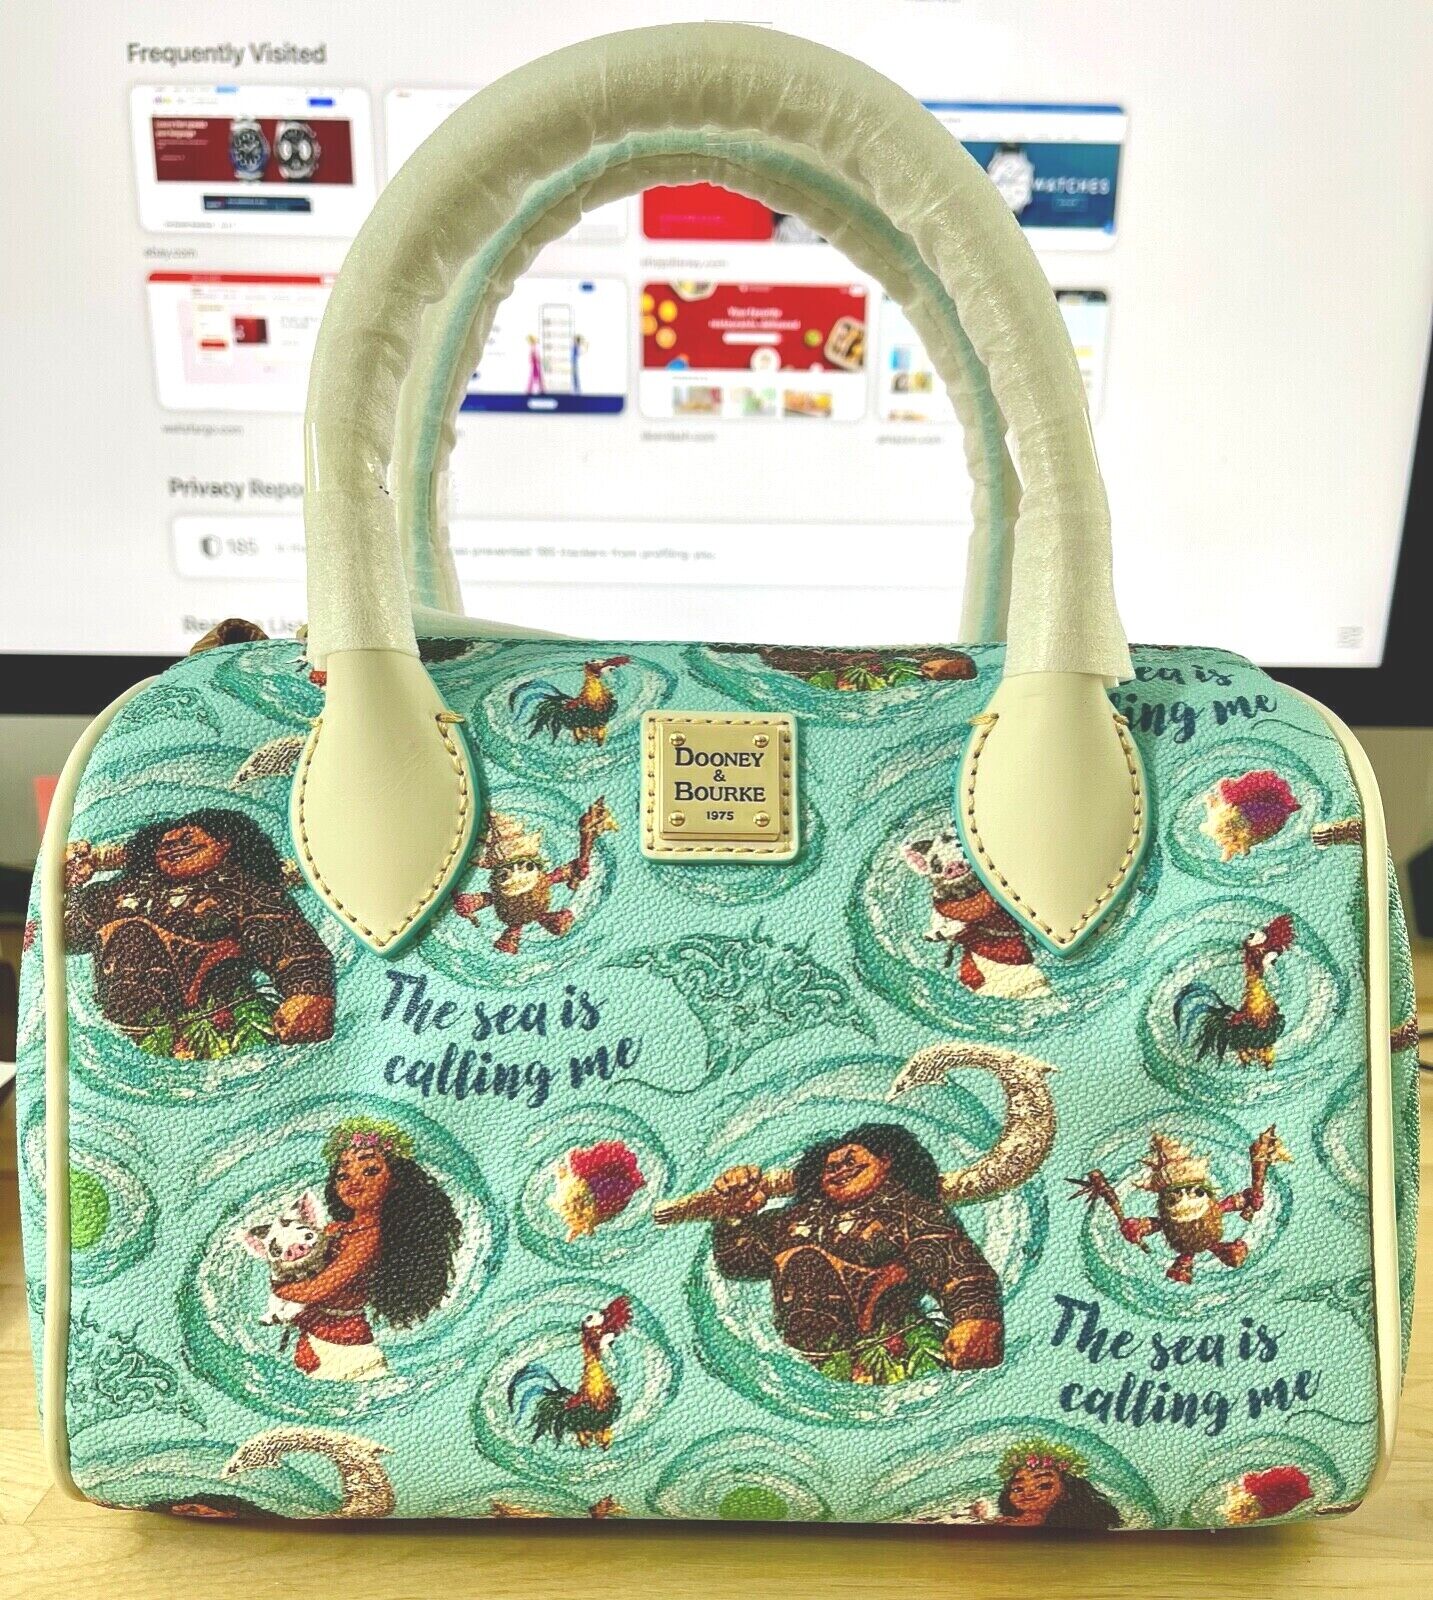 Disney Parks Princess Moana Crossbody Satchel Bag by Dooney & Bourke / NEW